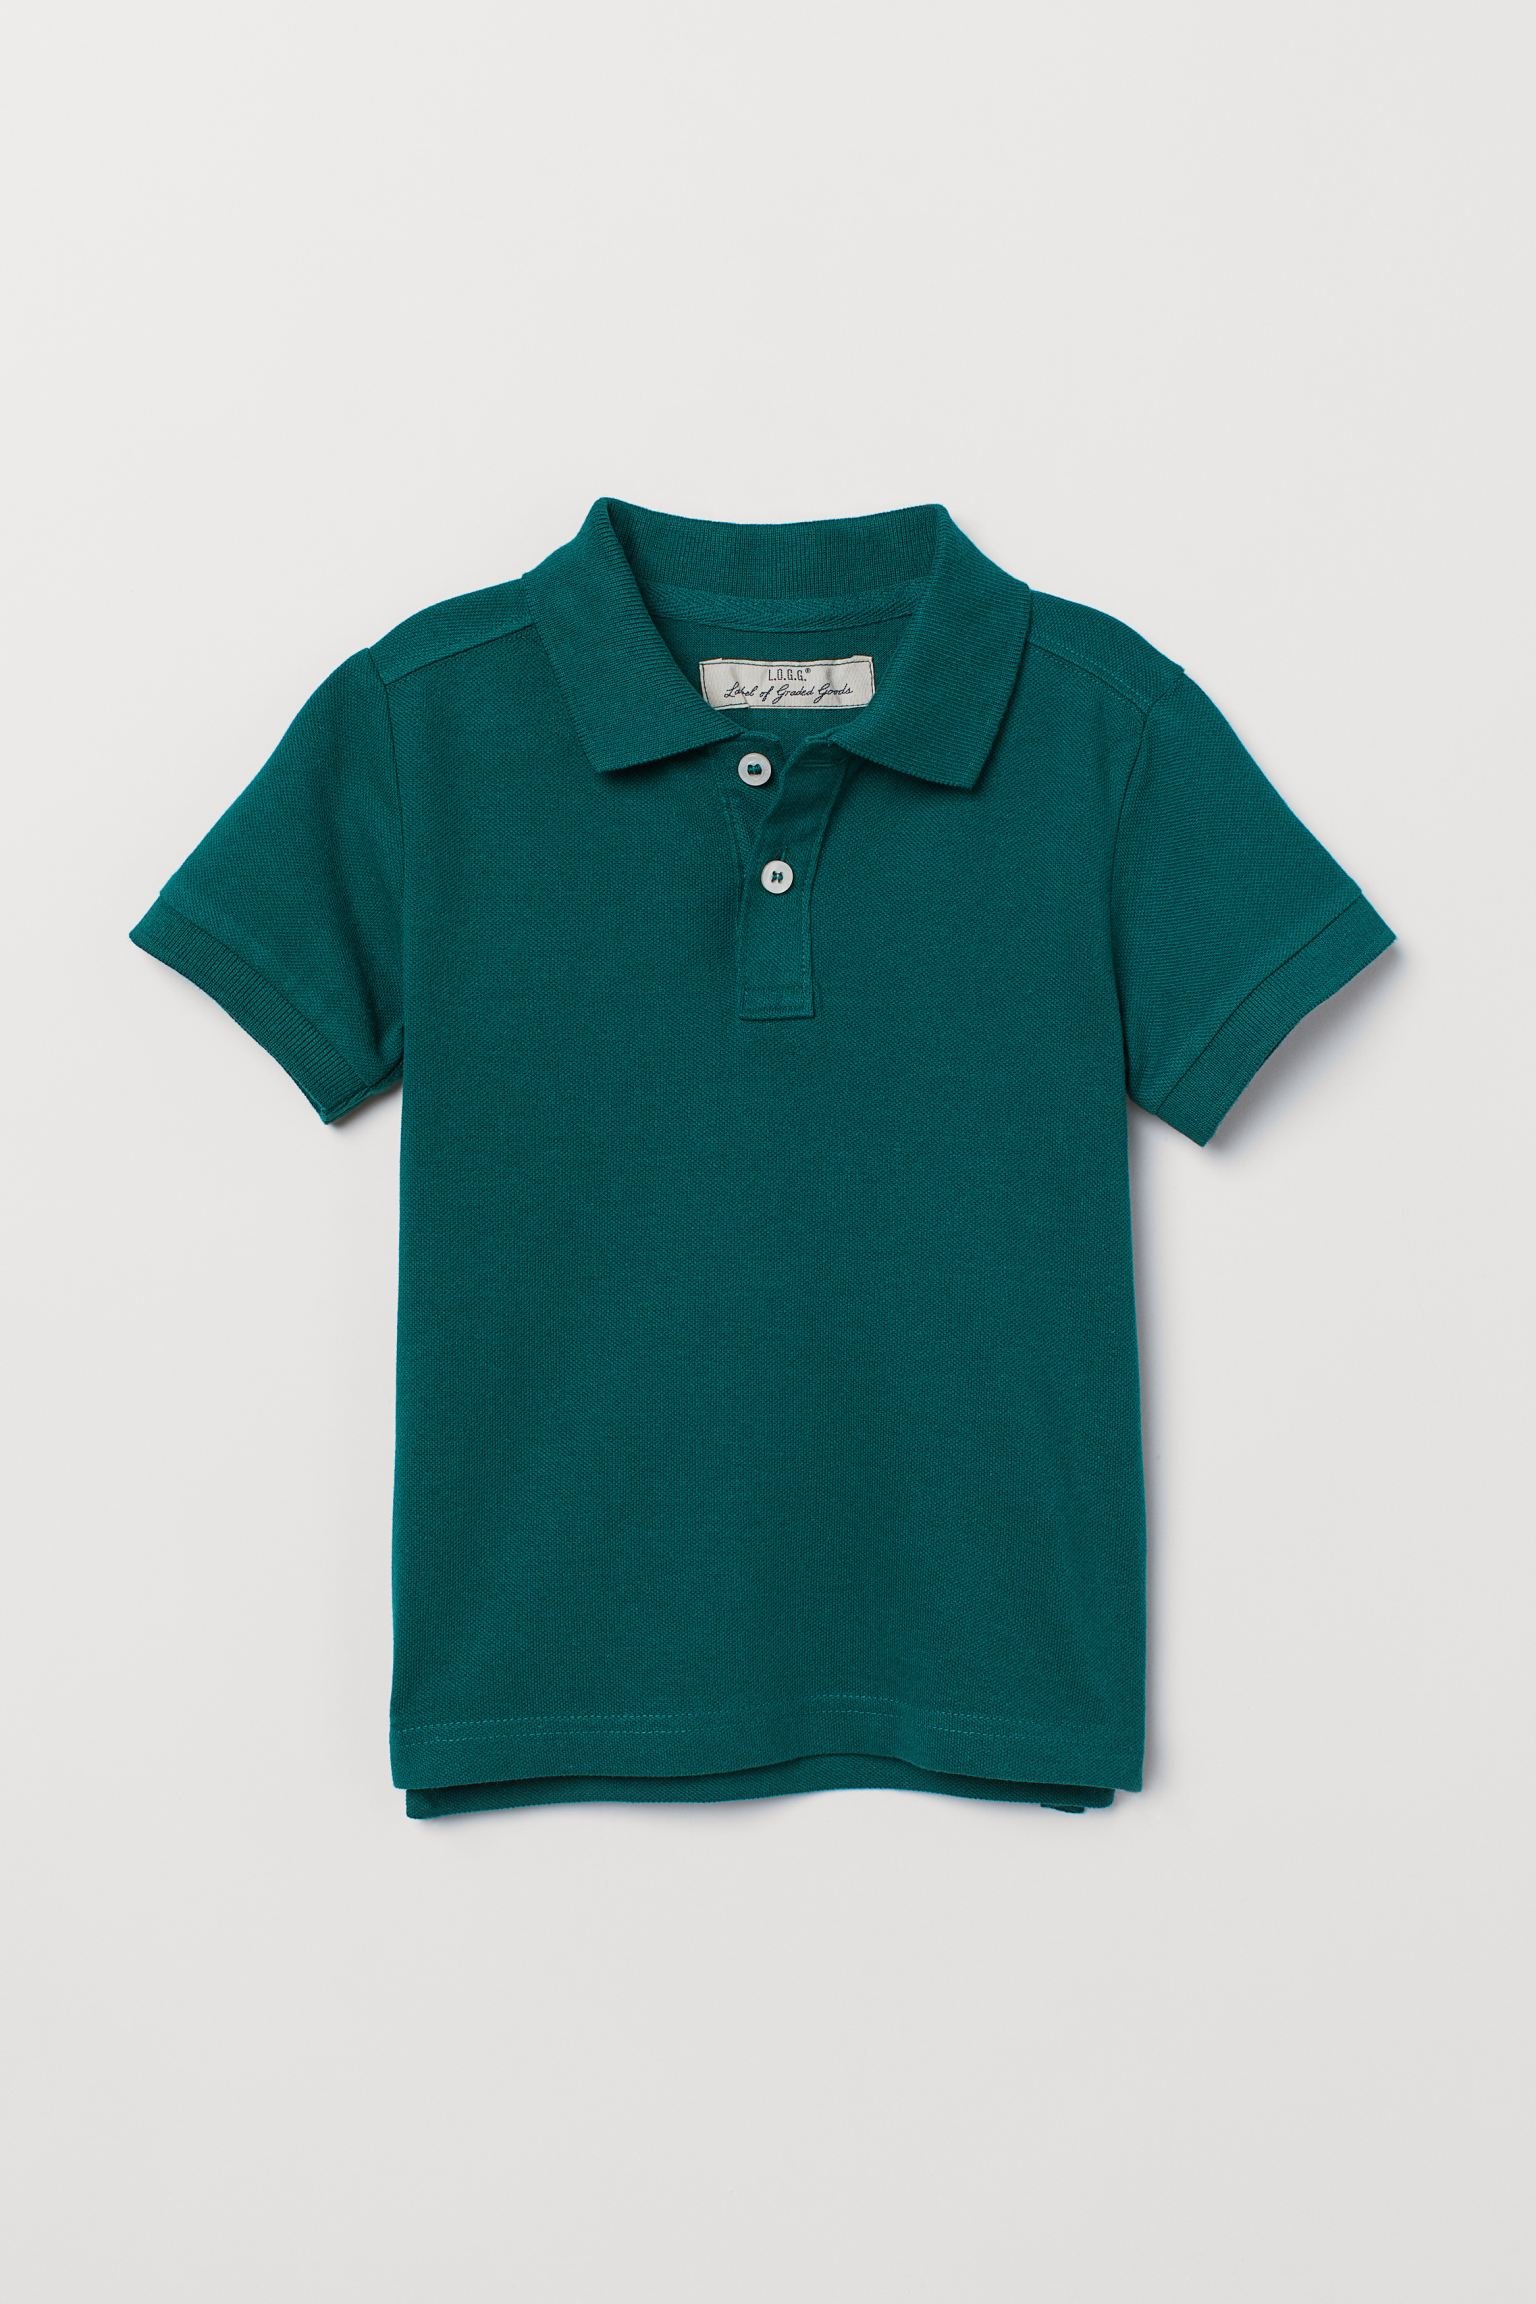 H&M Polo Shirt in Dark Green.jpg